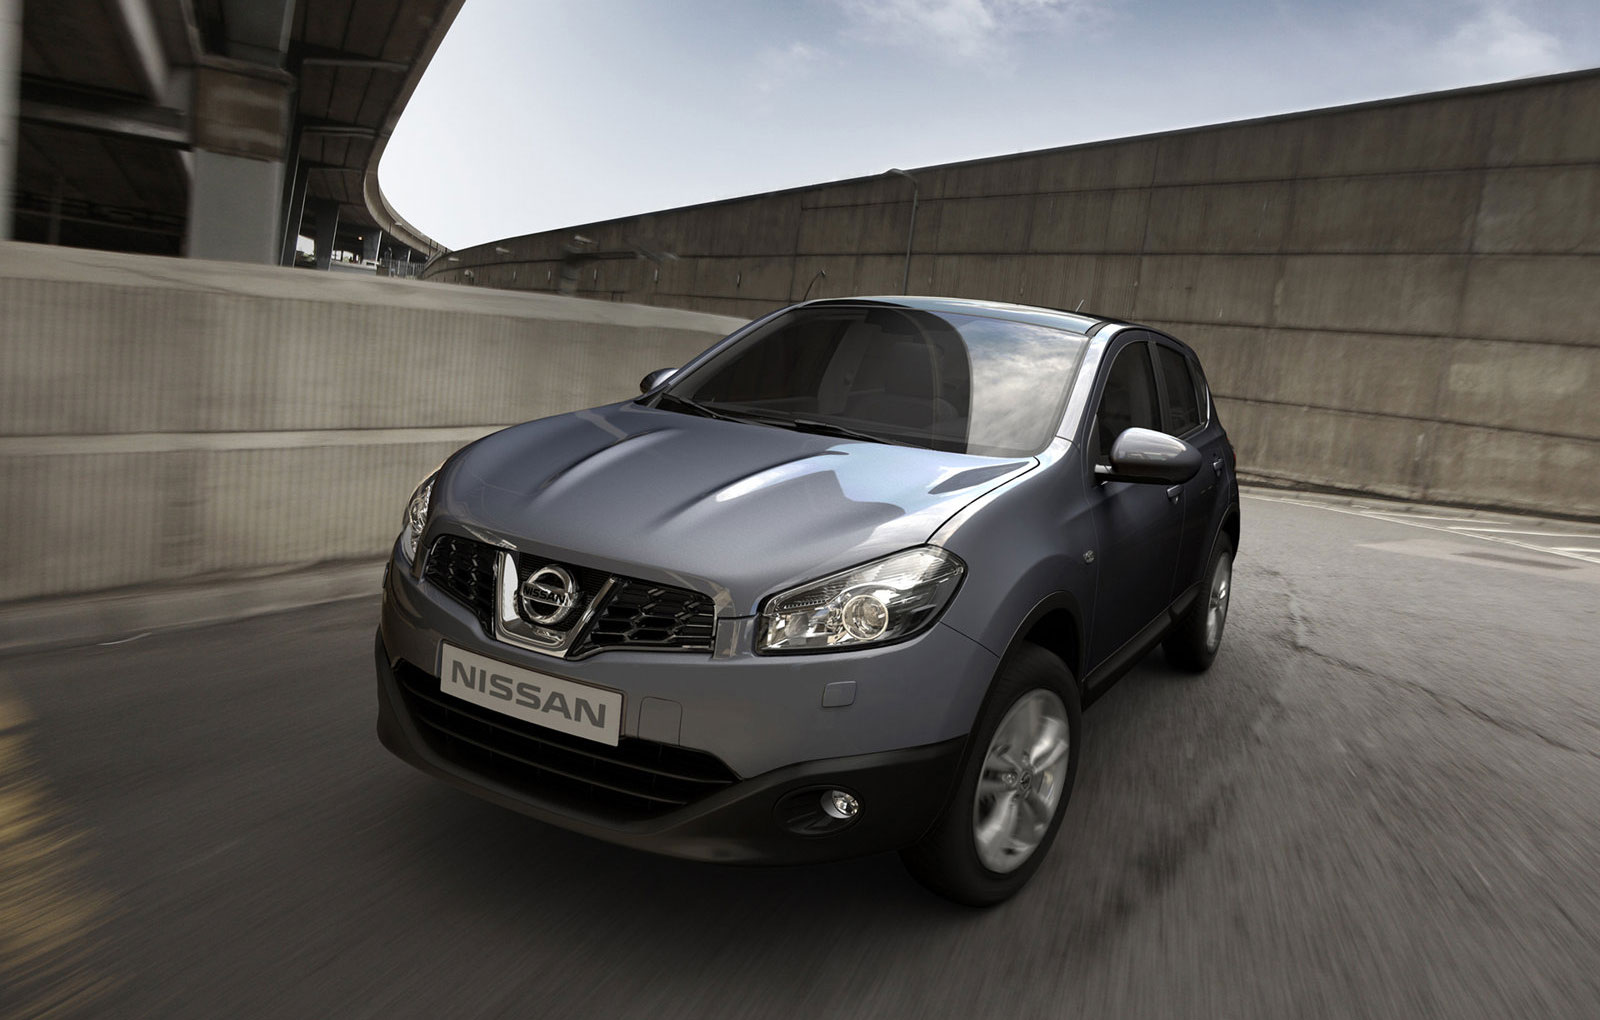 Nissan Qashqai Facelift Photos Released Ahead of Geneva Debut